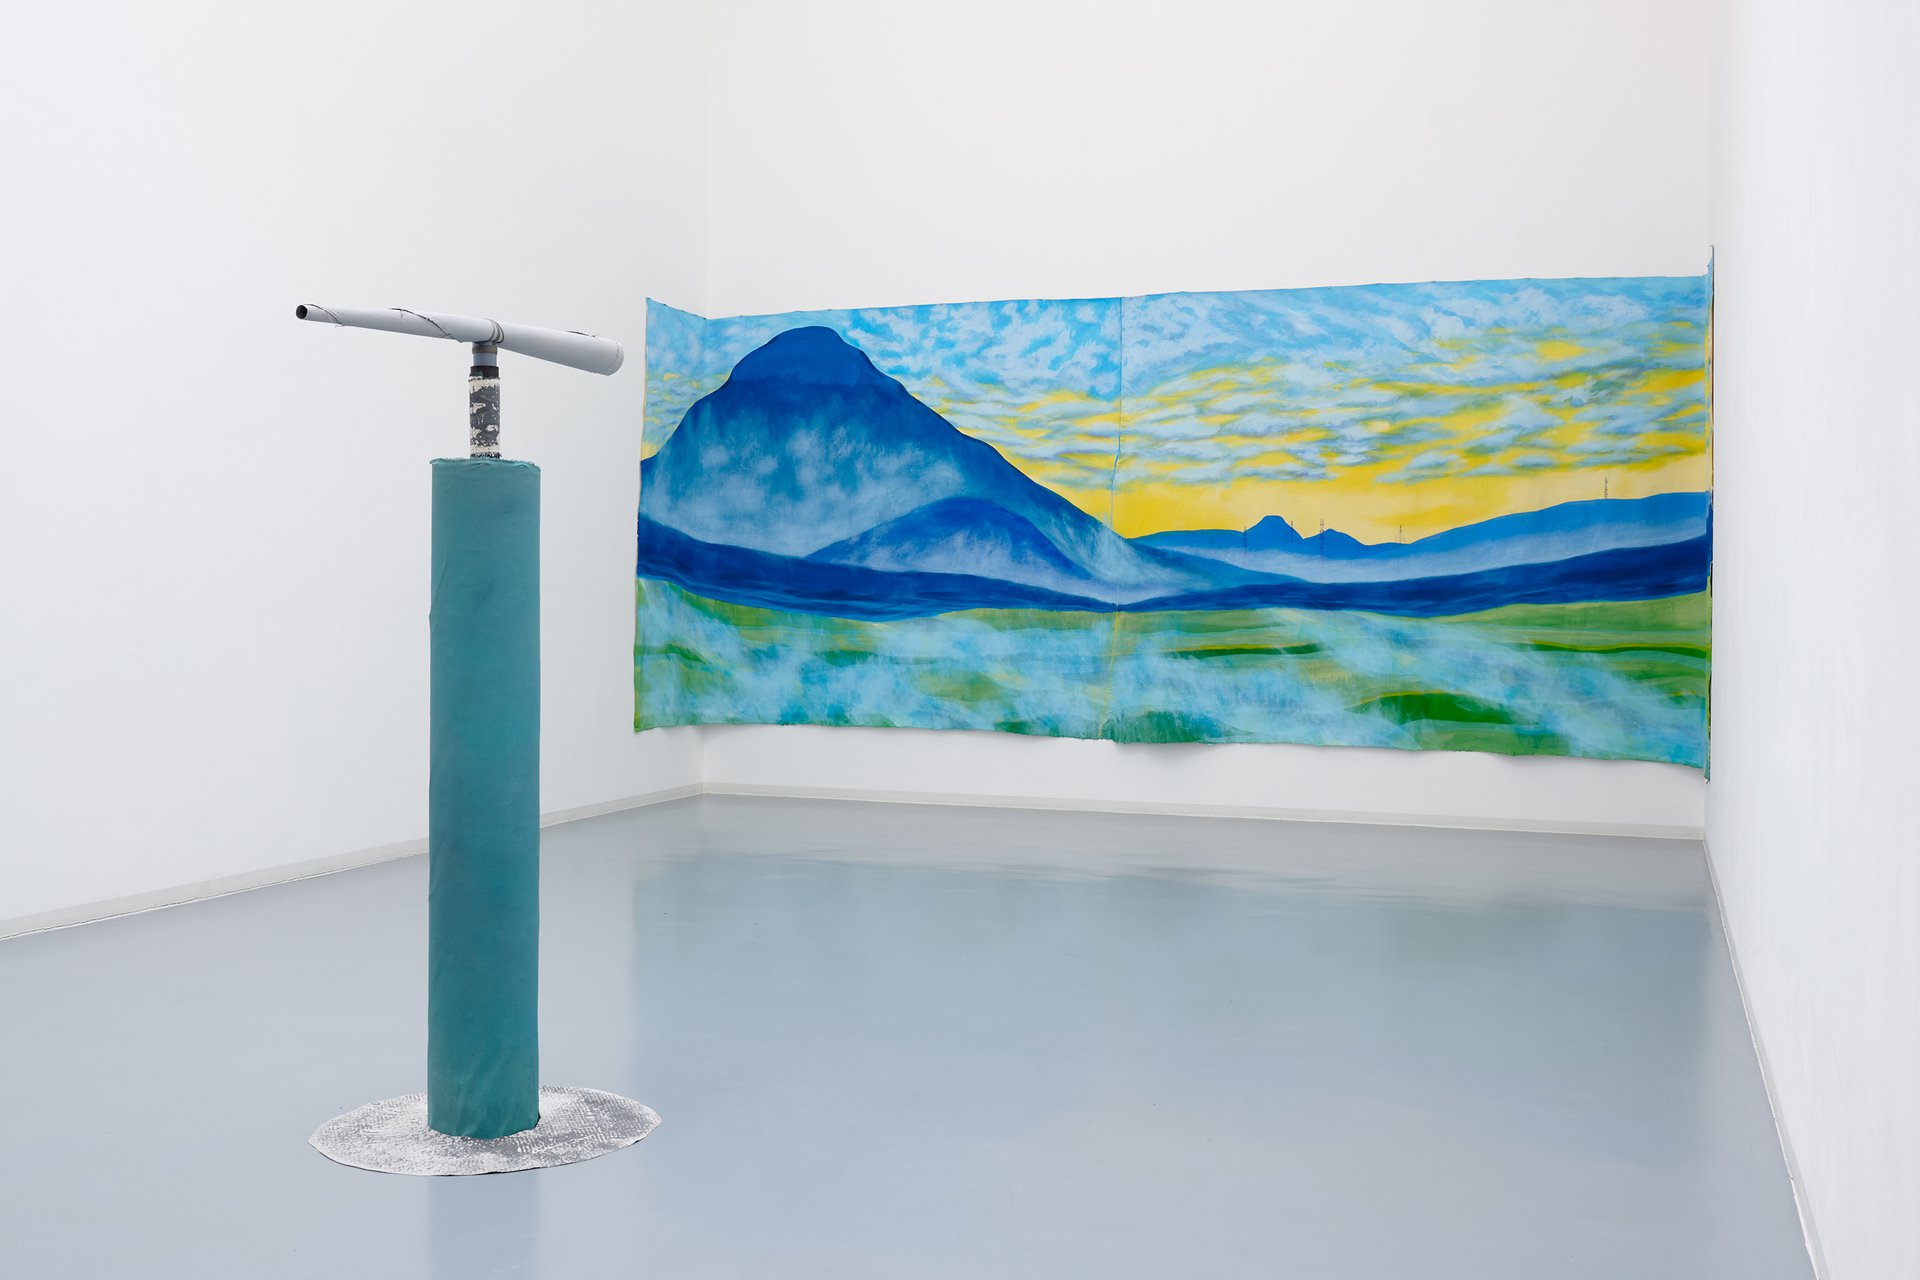 Lotte Maiwald, installation view, 2020, Bonner Kunstverein, courtesy of the artist. Photo: Mareike Tocha